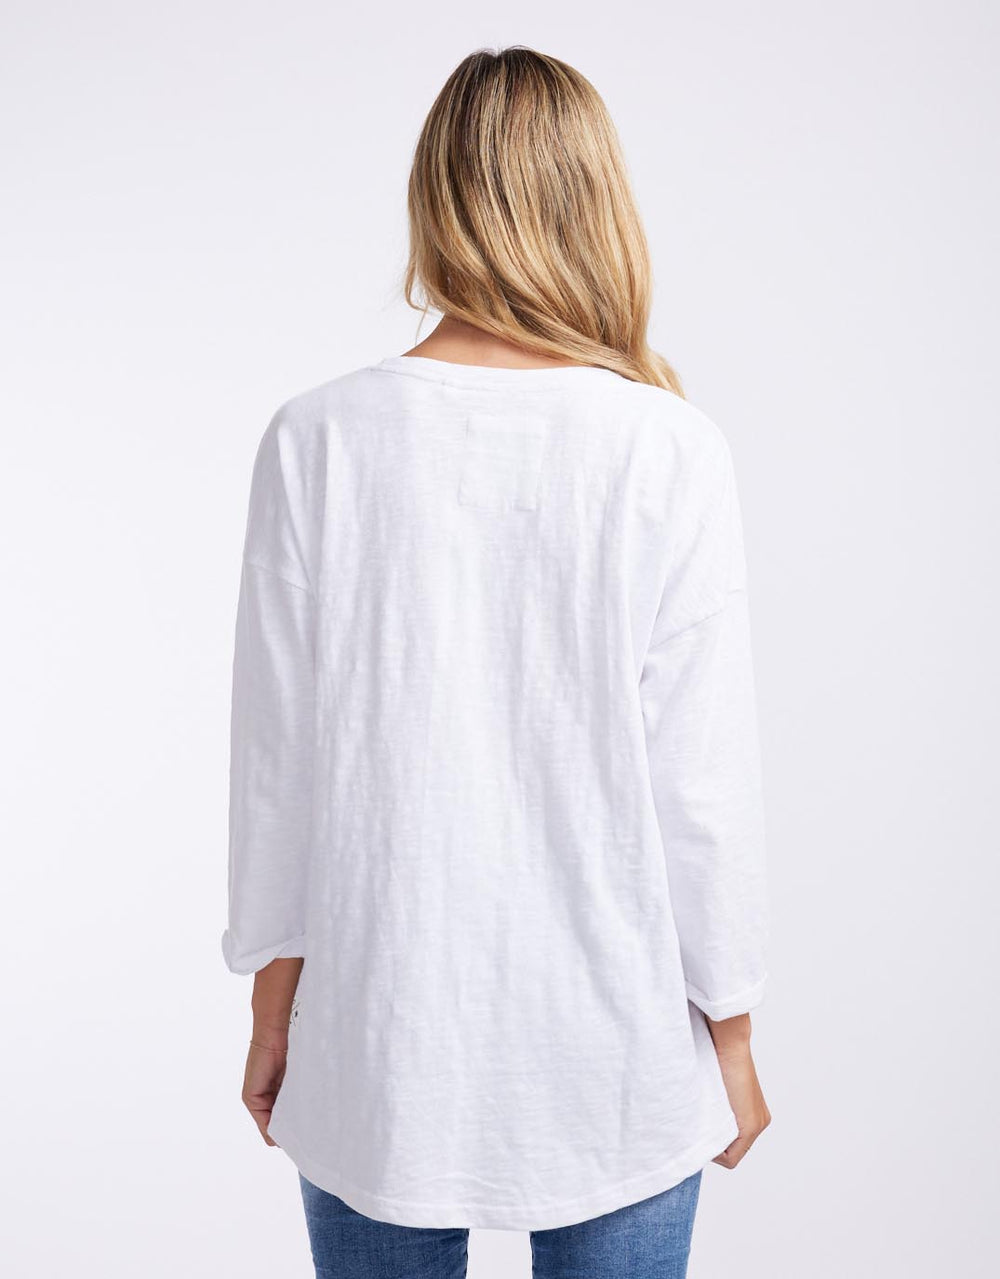 elm-annie-3-4-sleeve-tee-white-womens-clothing